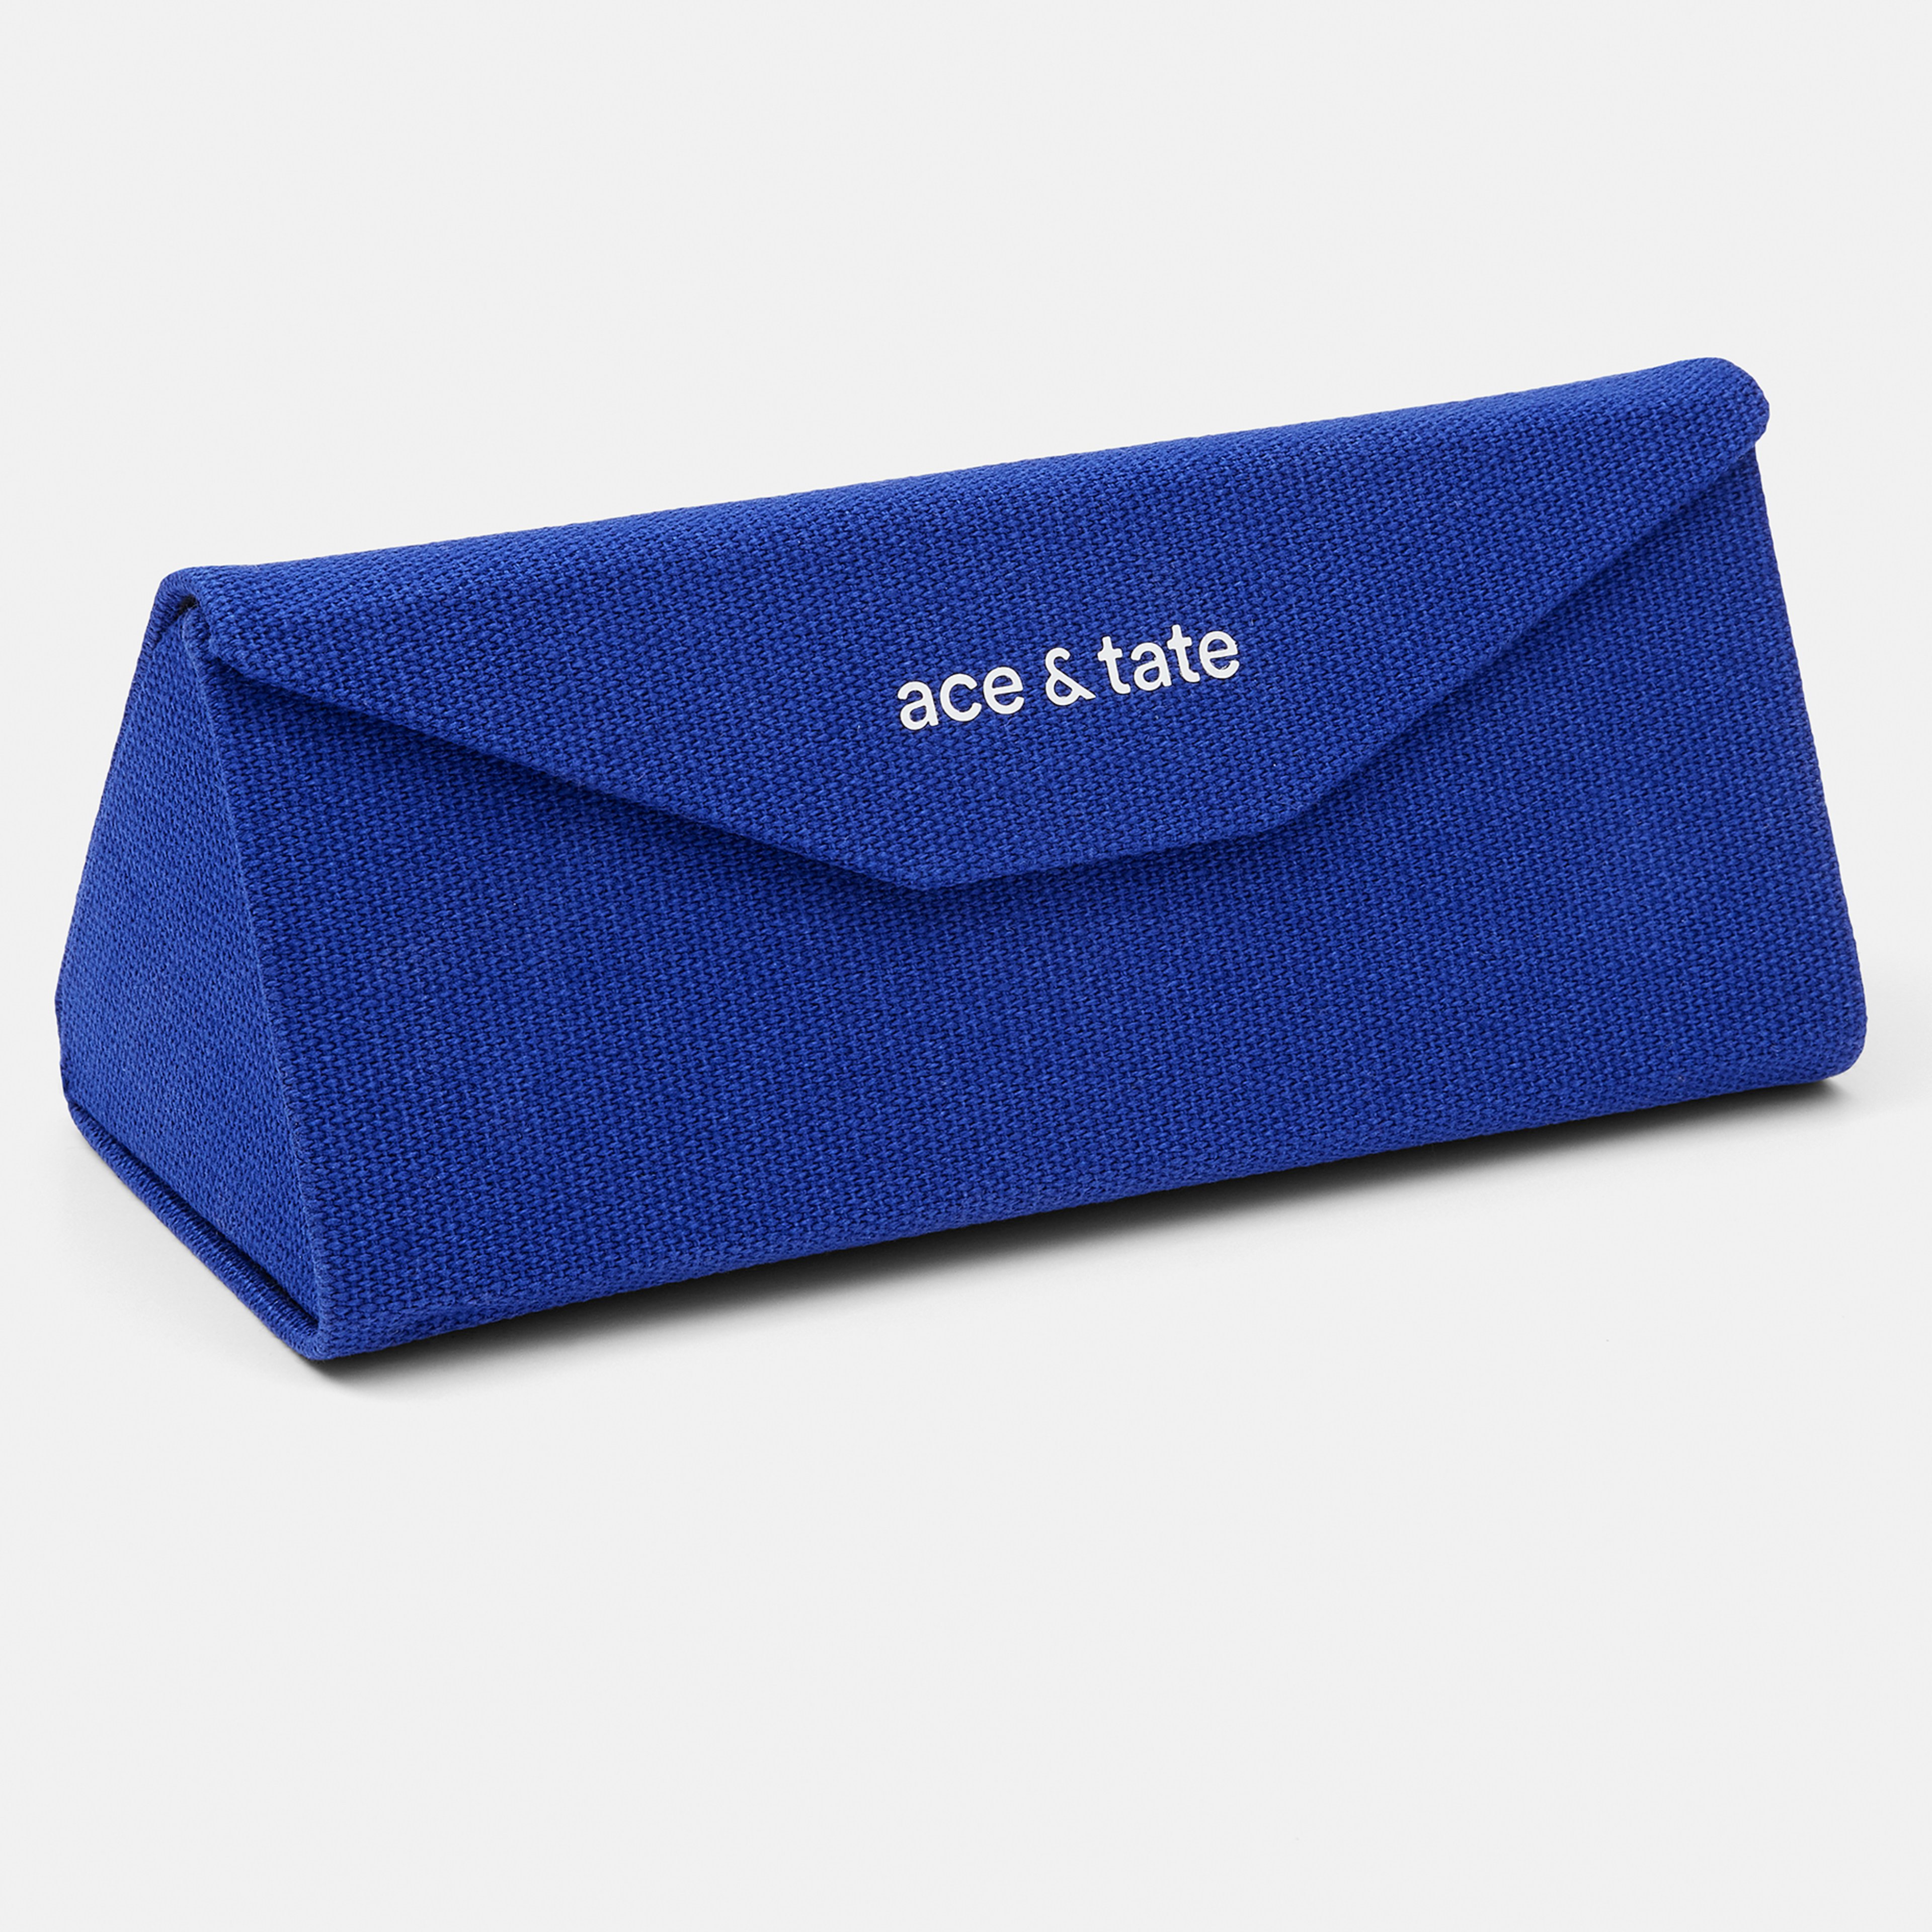 Ace & Tate Accessory Origami case